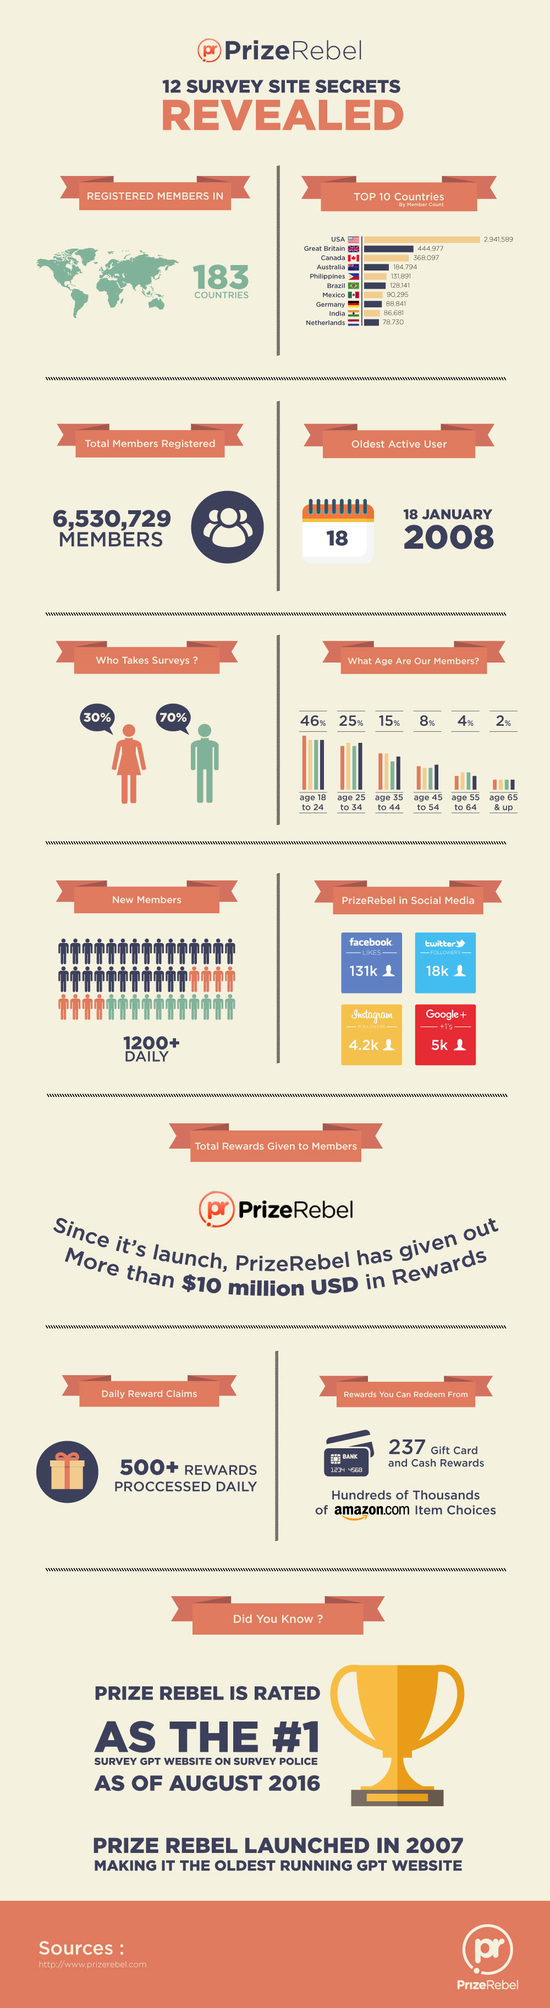 Prizerebel 12 Survey Site Secrets Revealed Infographic 2016